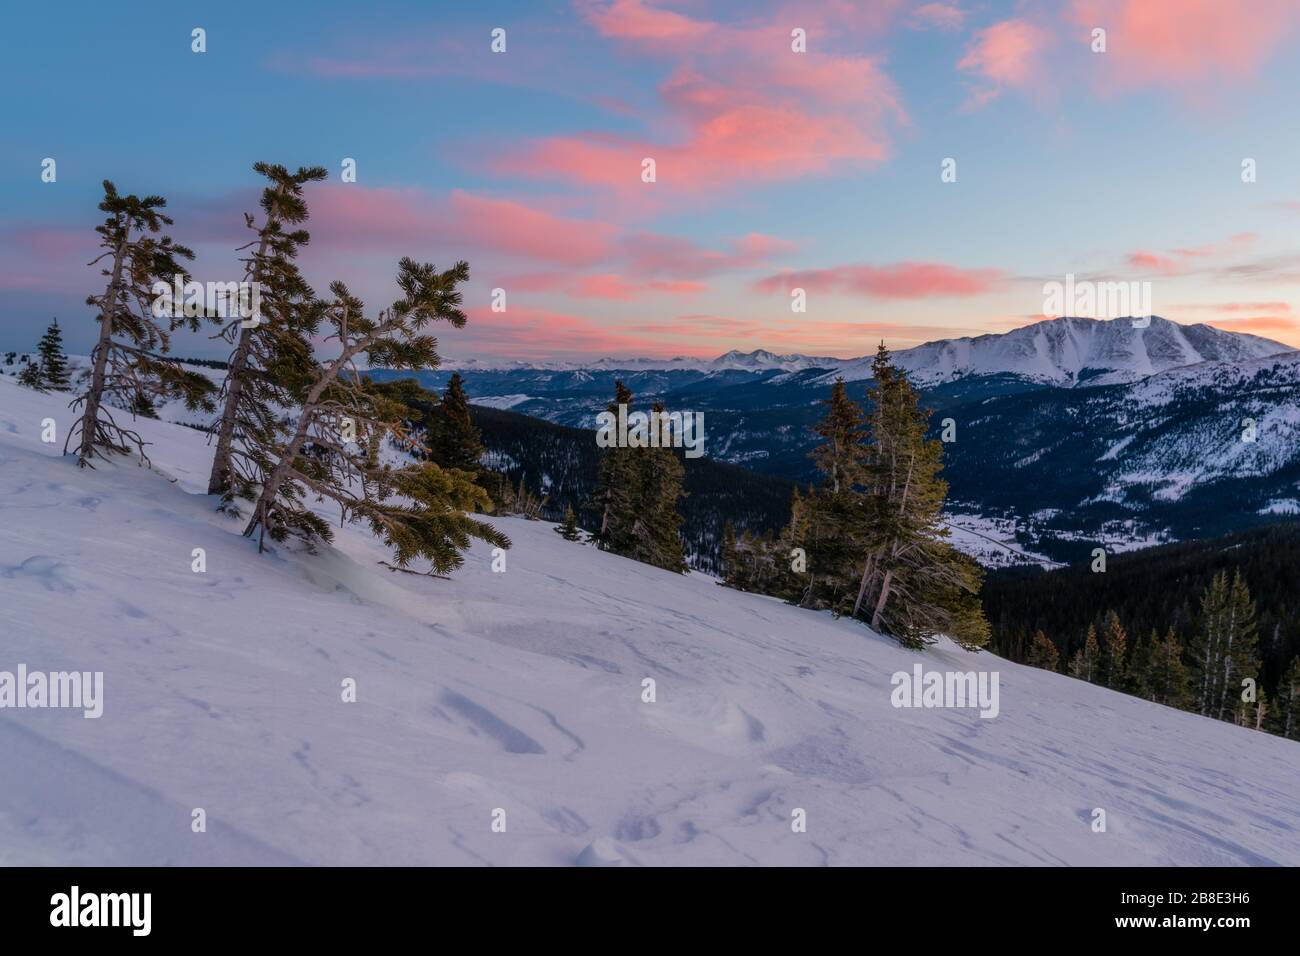 Winter sunrise on Quandary Peak, South of Breckenridge, Colorado. Stock Photo